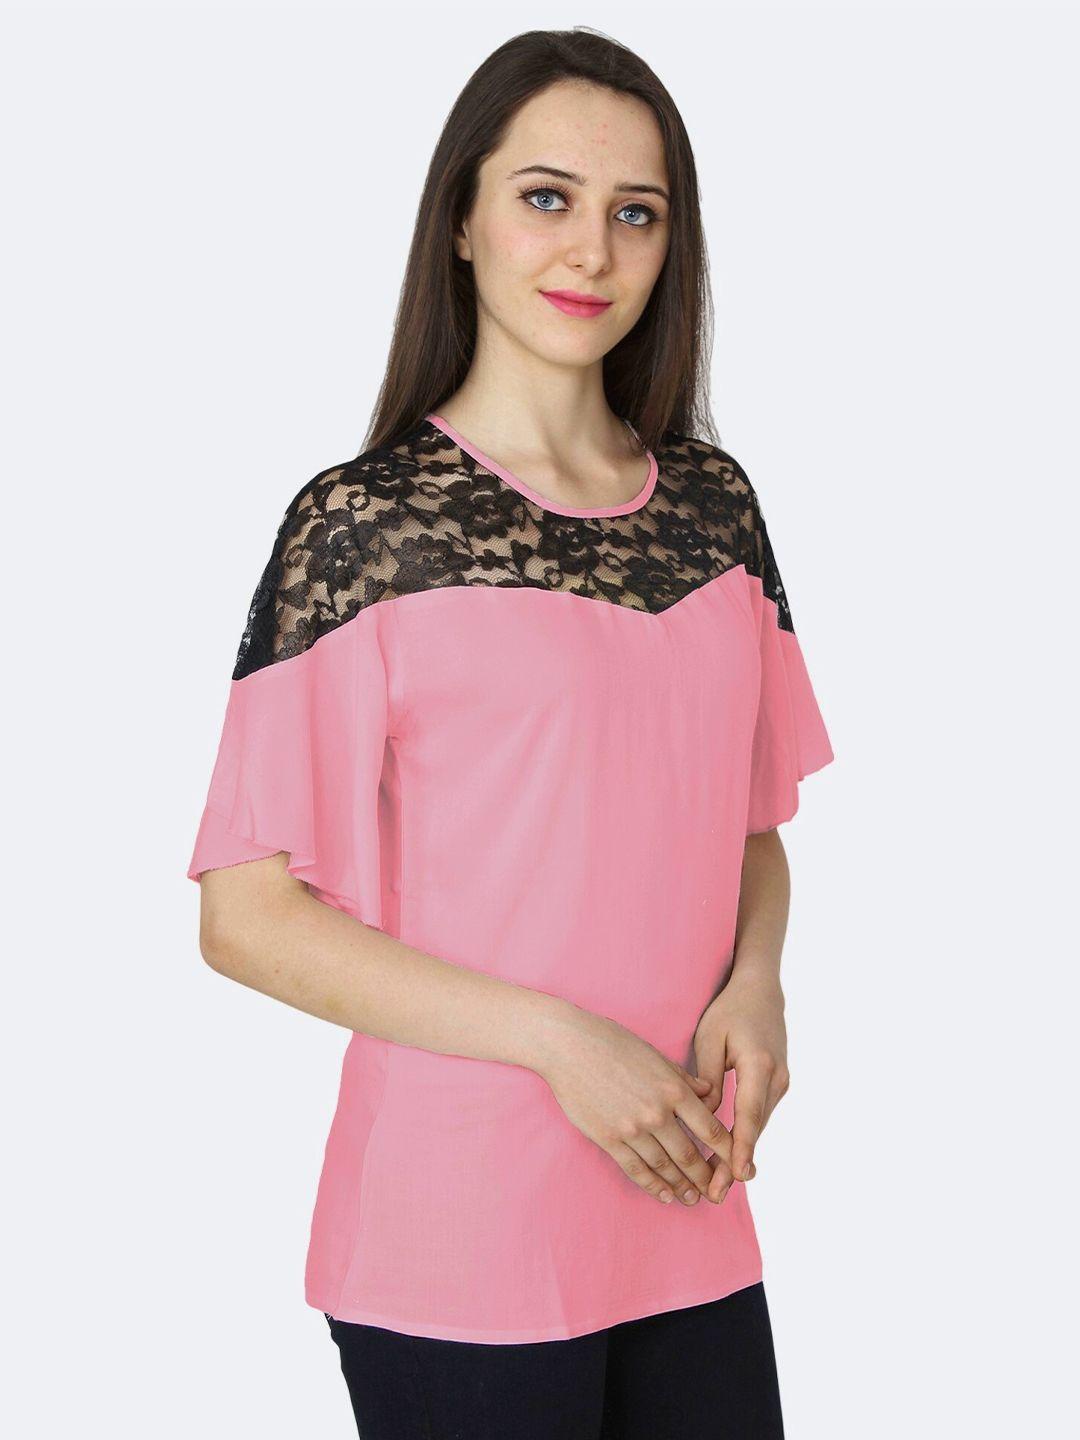 patrorna-women-pink-&-black-top